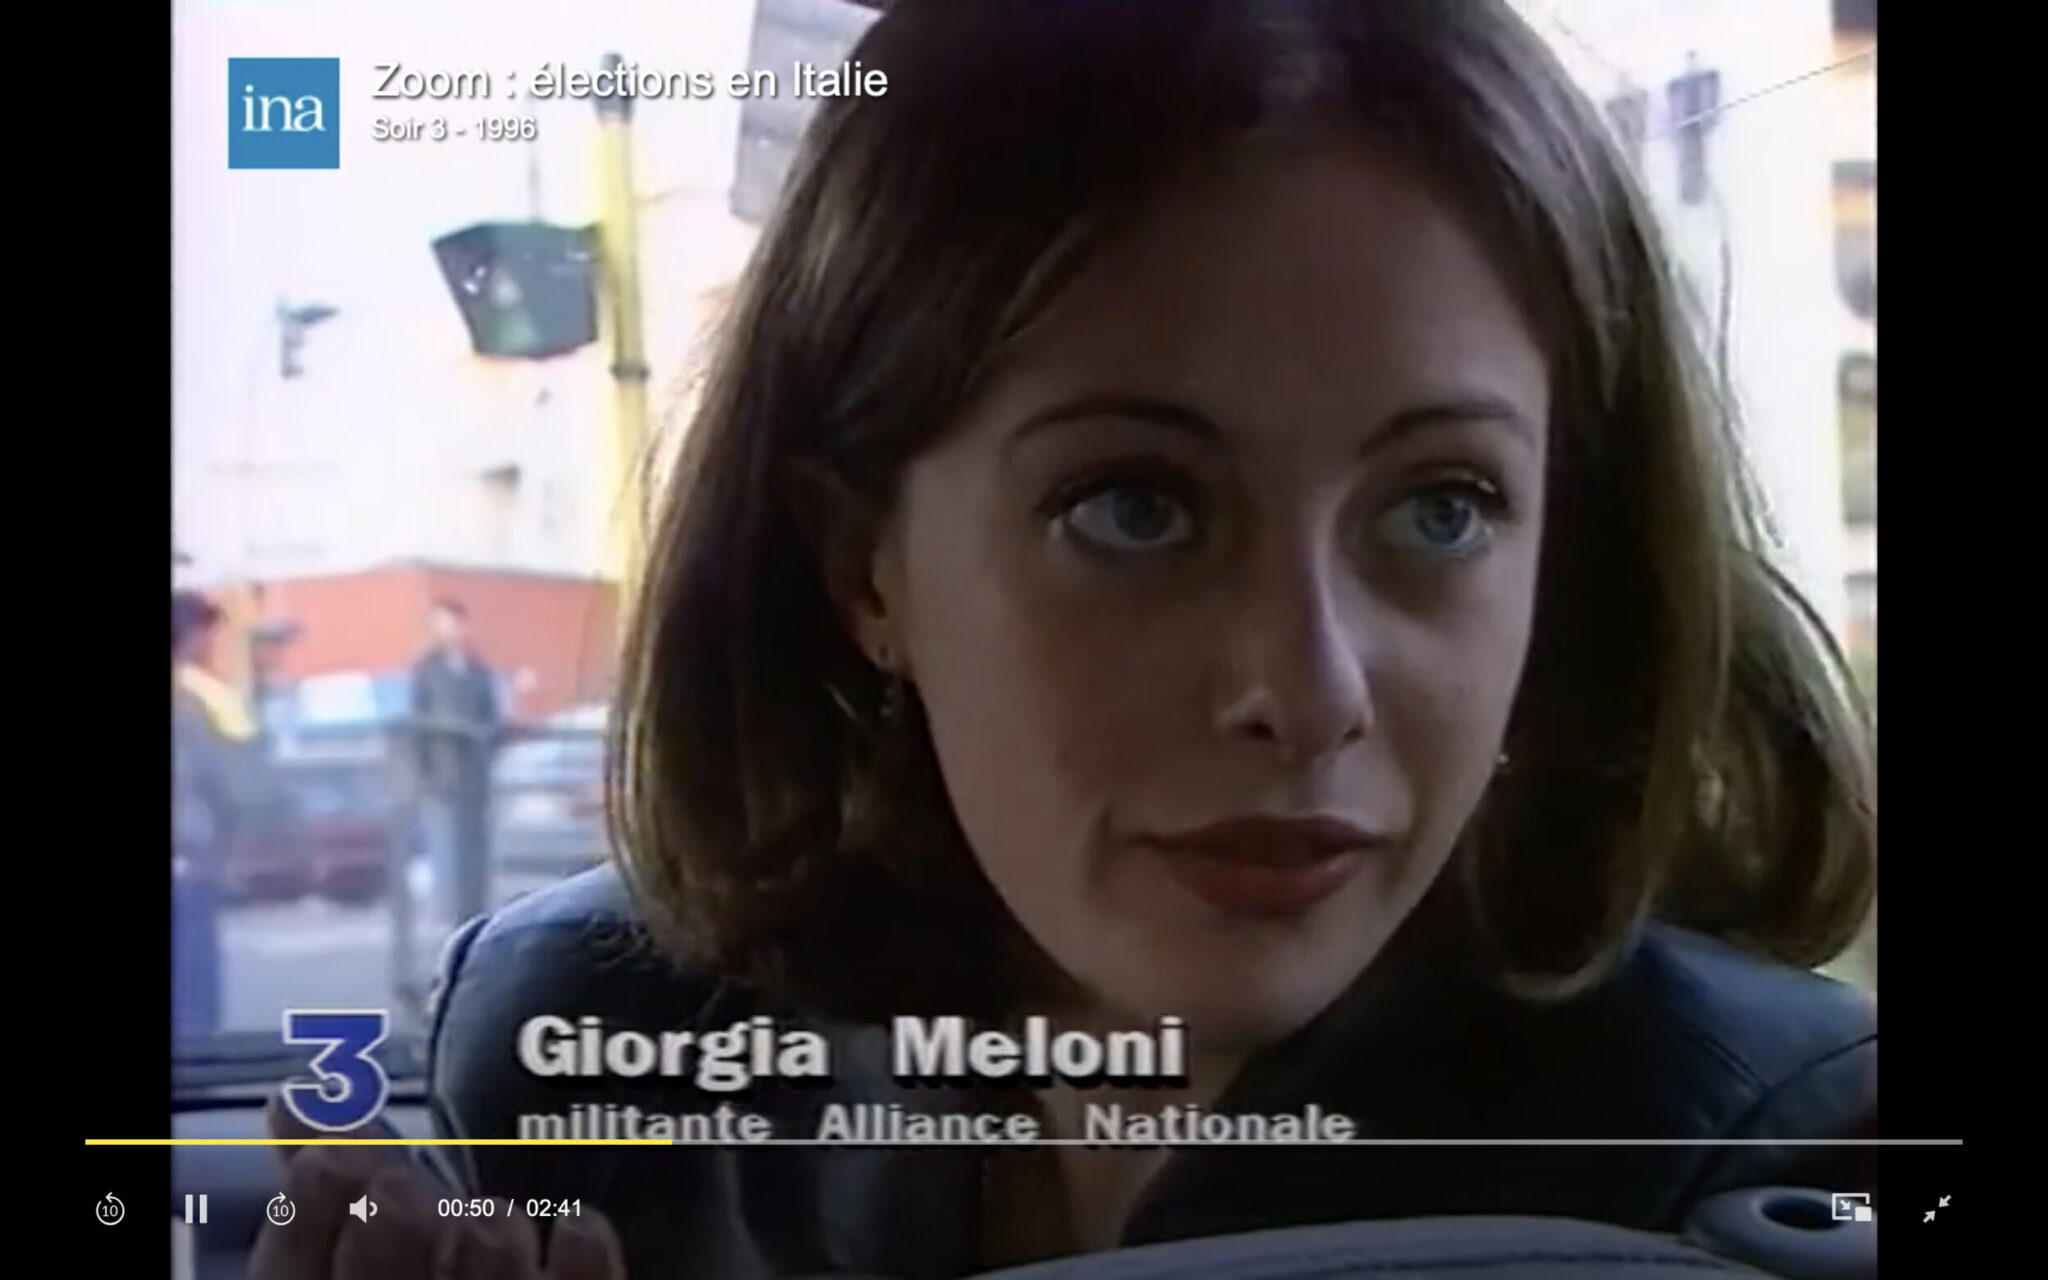 giorgia meloni archives ina 1996